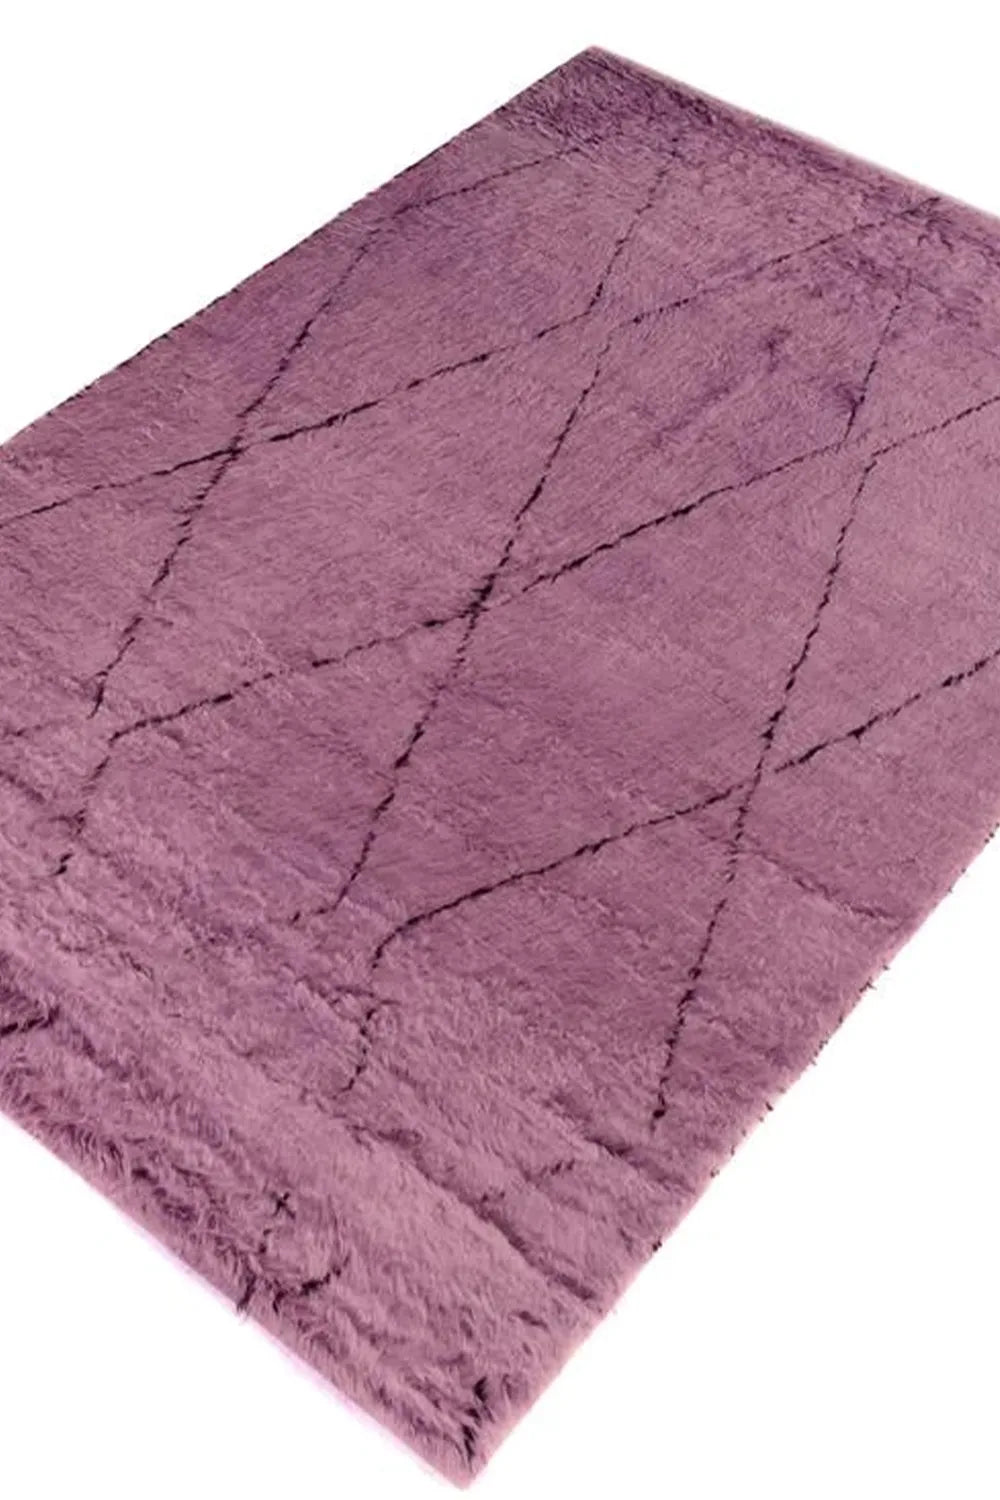 Elegant Dark Purple Wool Rug in 3x5 Size, Ideal for Bedroom Comfort